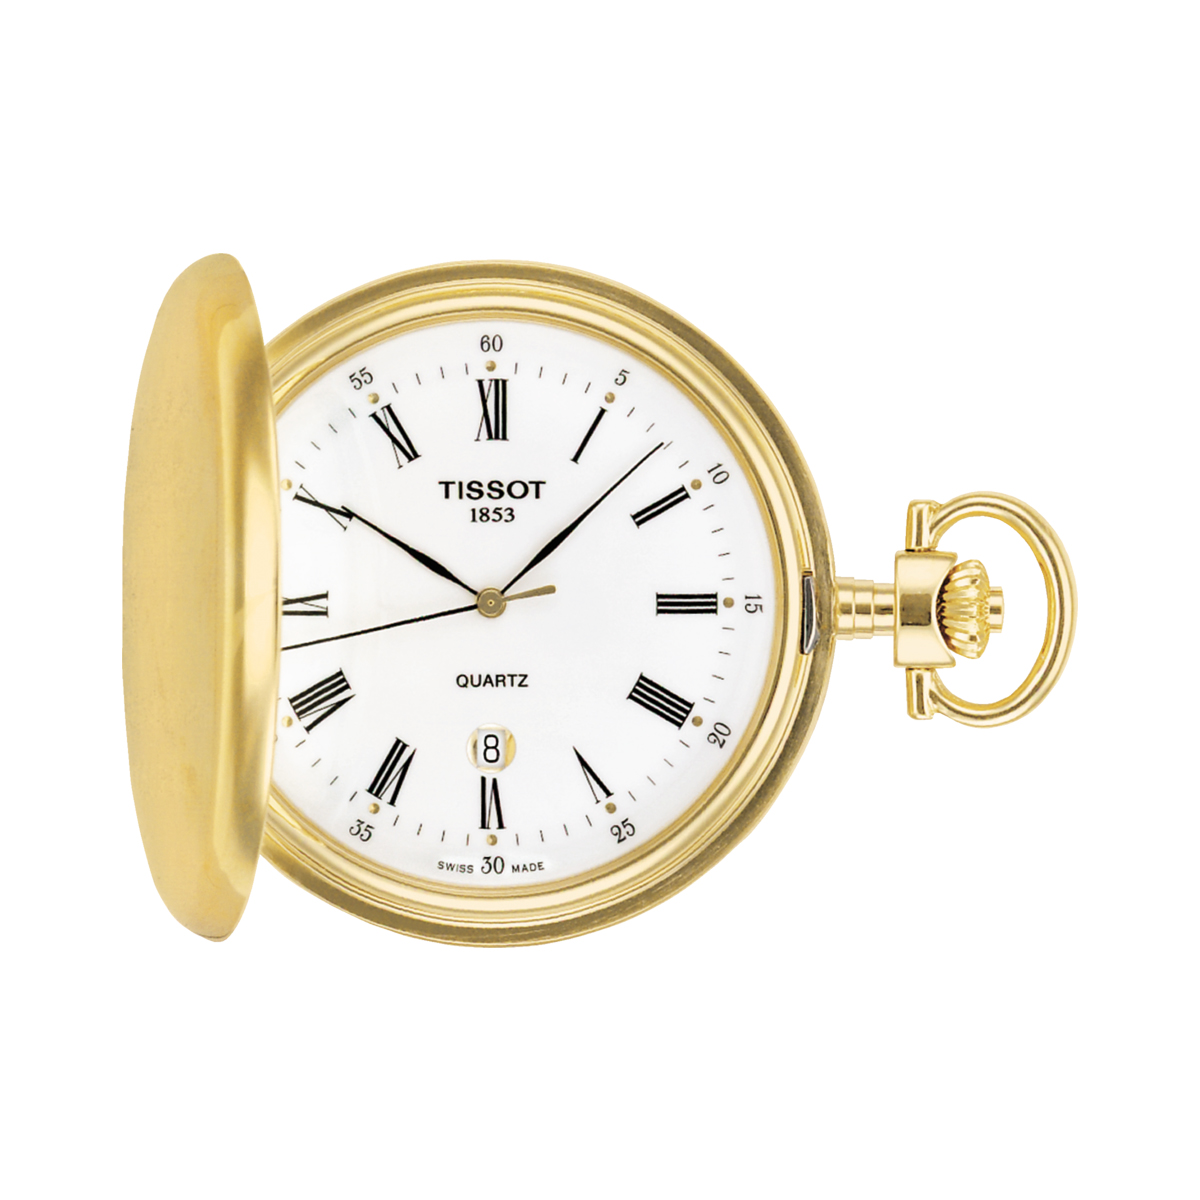 Tissot Savonnette Gold Plated Pocket Watch